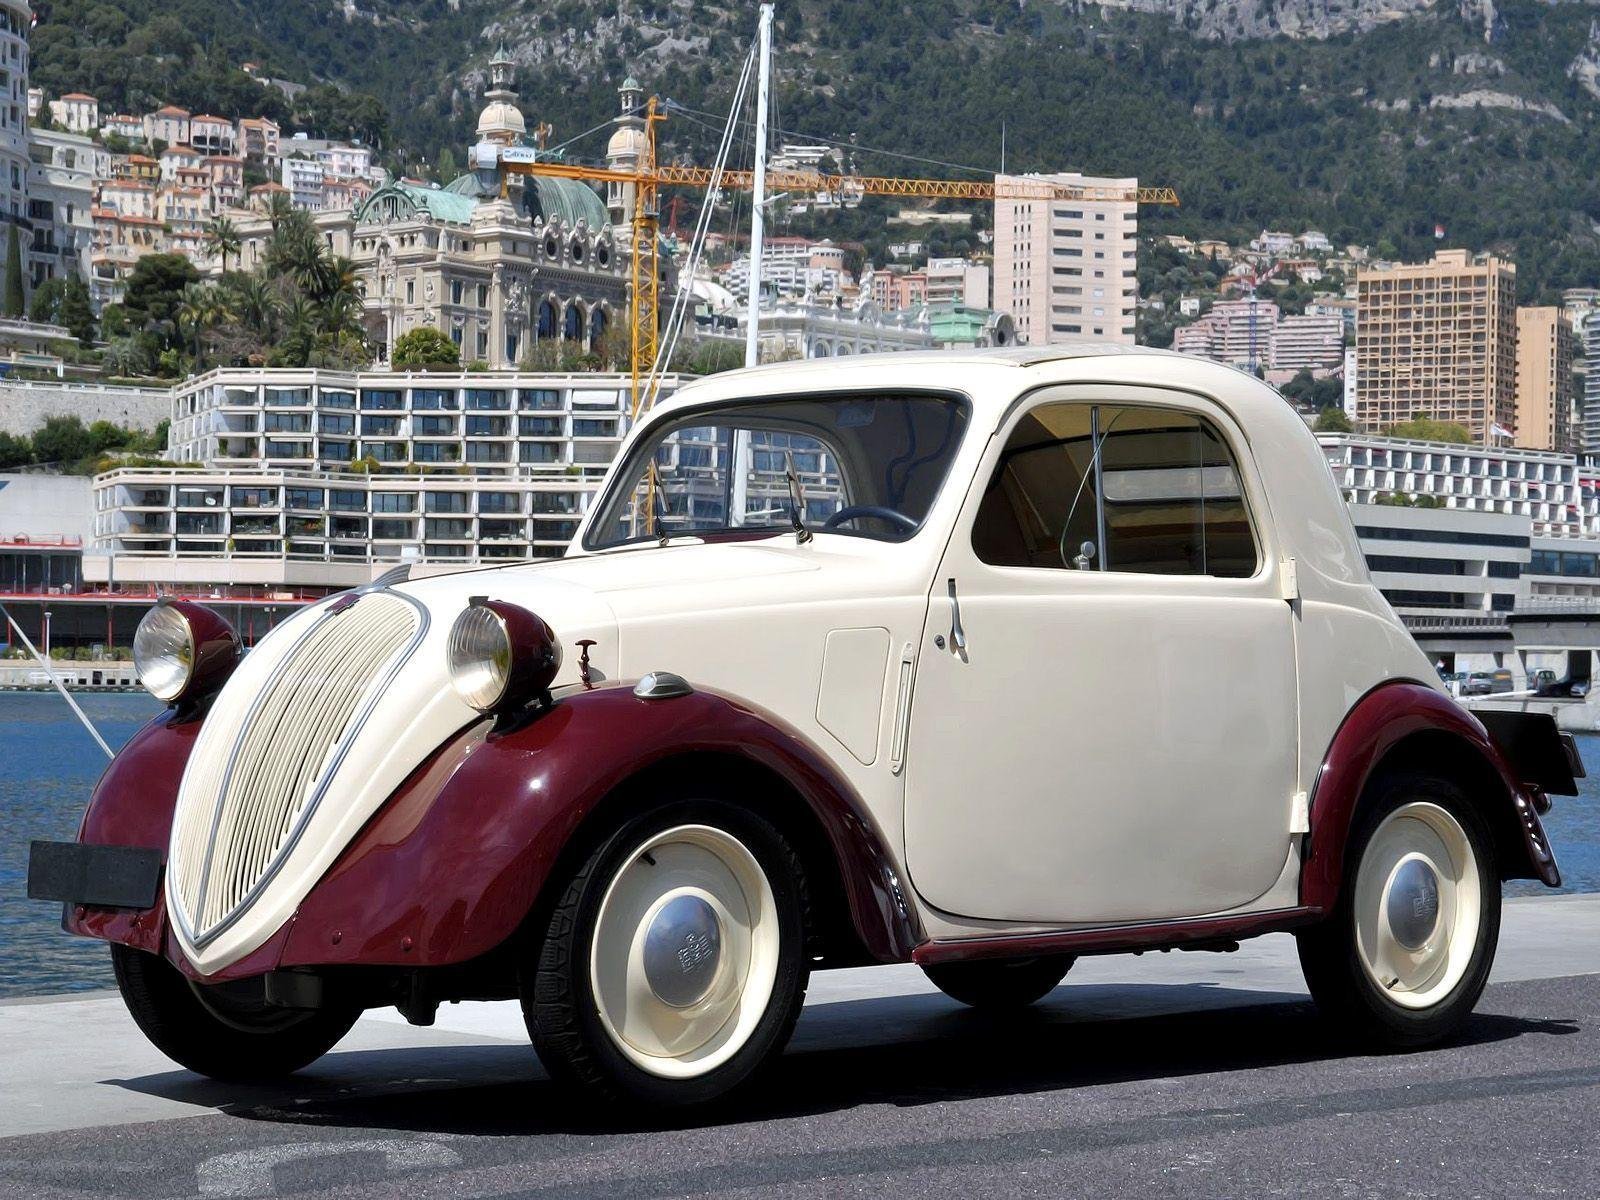 Француз авто. Simca 5 1936. Фиат Тополино 1936. Fiat 500 1936. Фиат Тополино 2023.